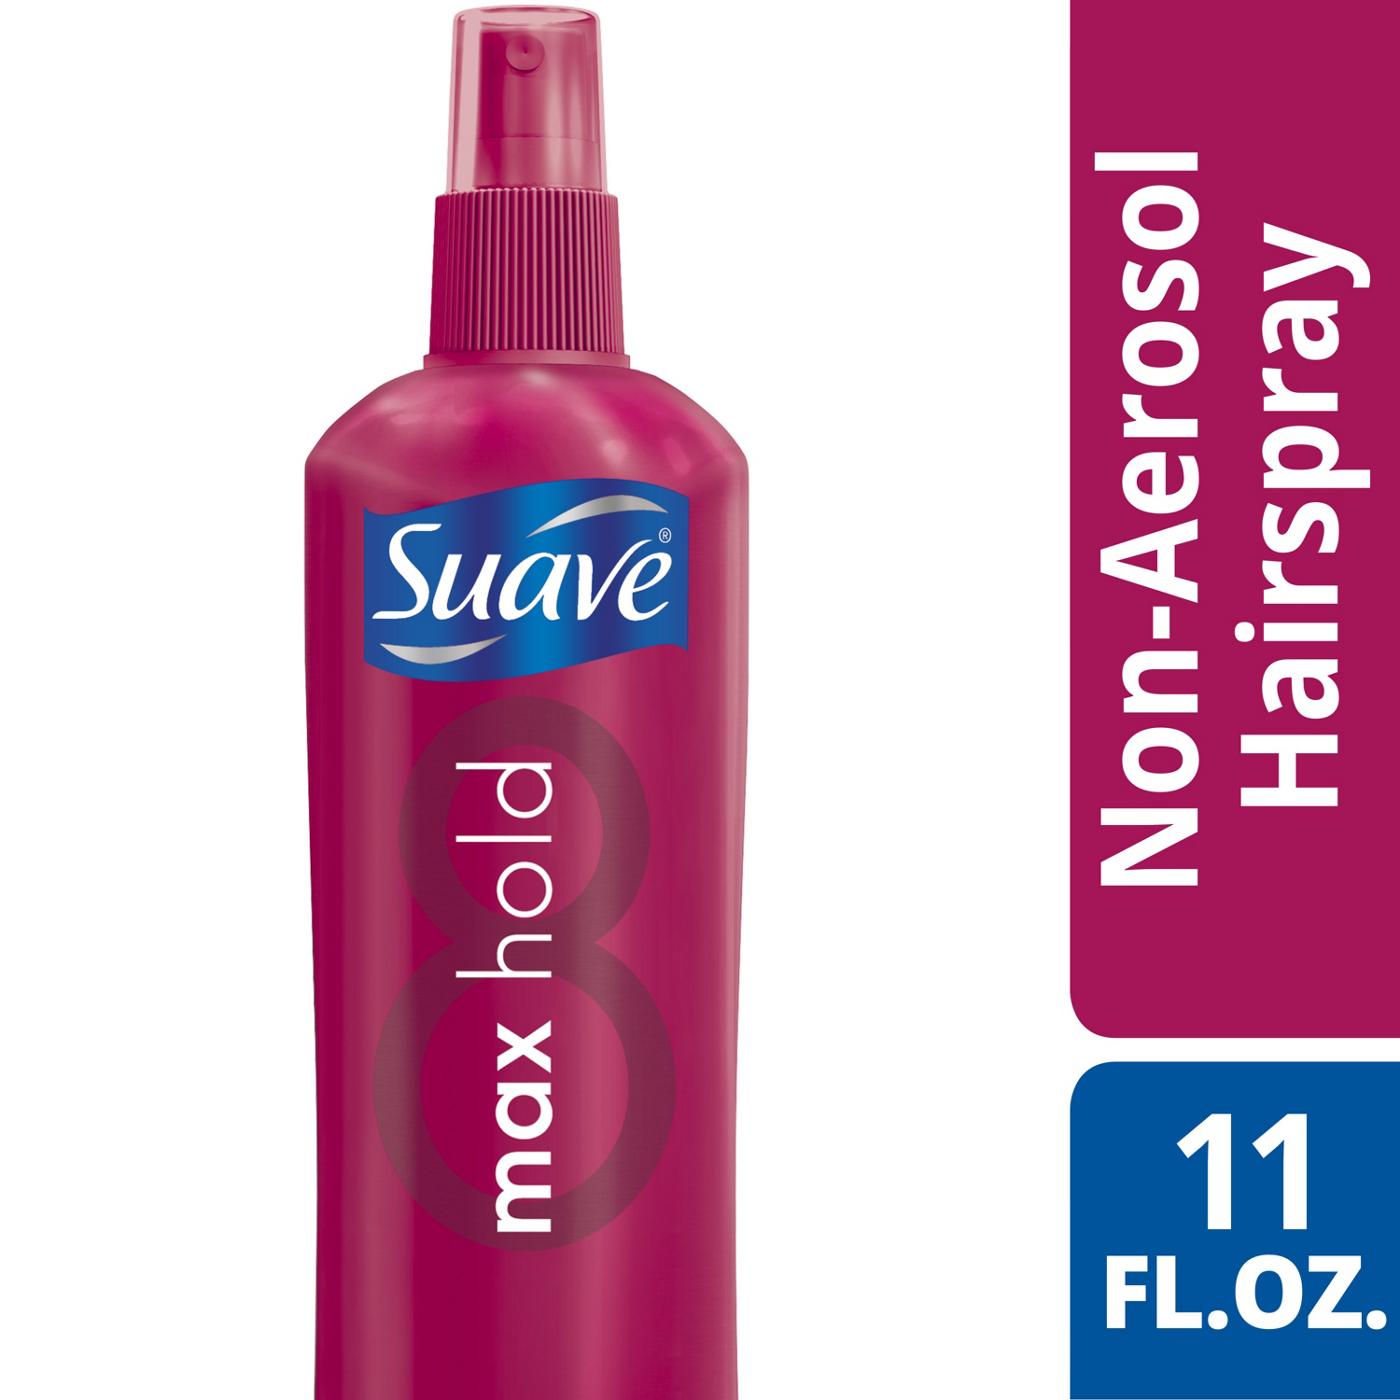 Suave Max Hold Non Aerosol Hairspray; image 2 of 3